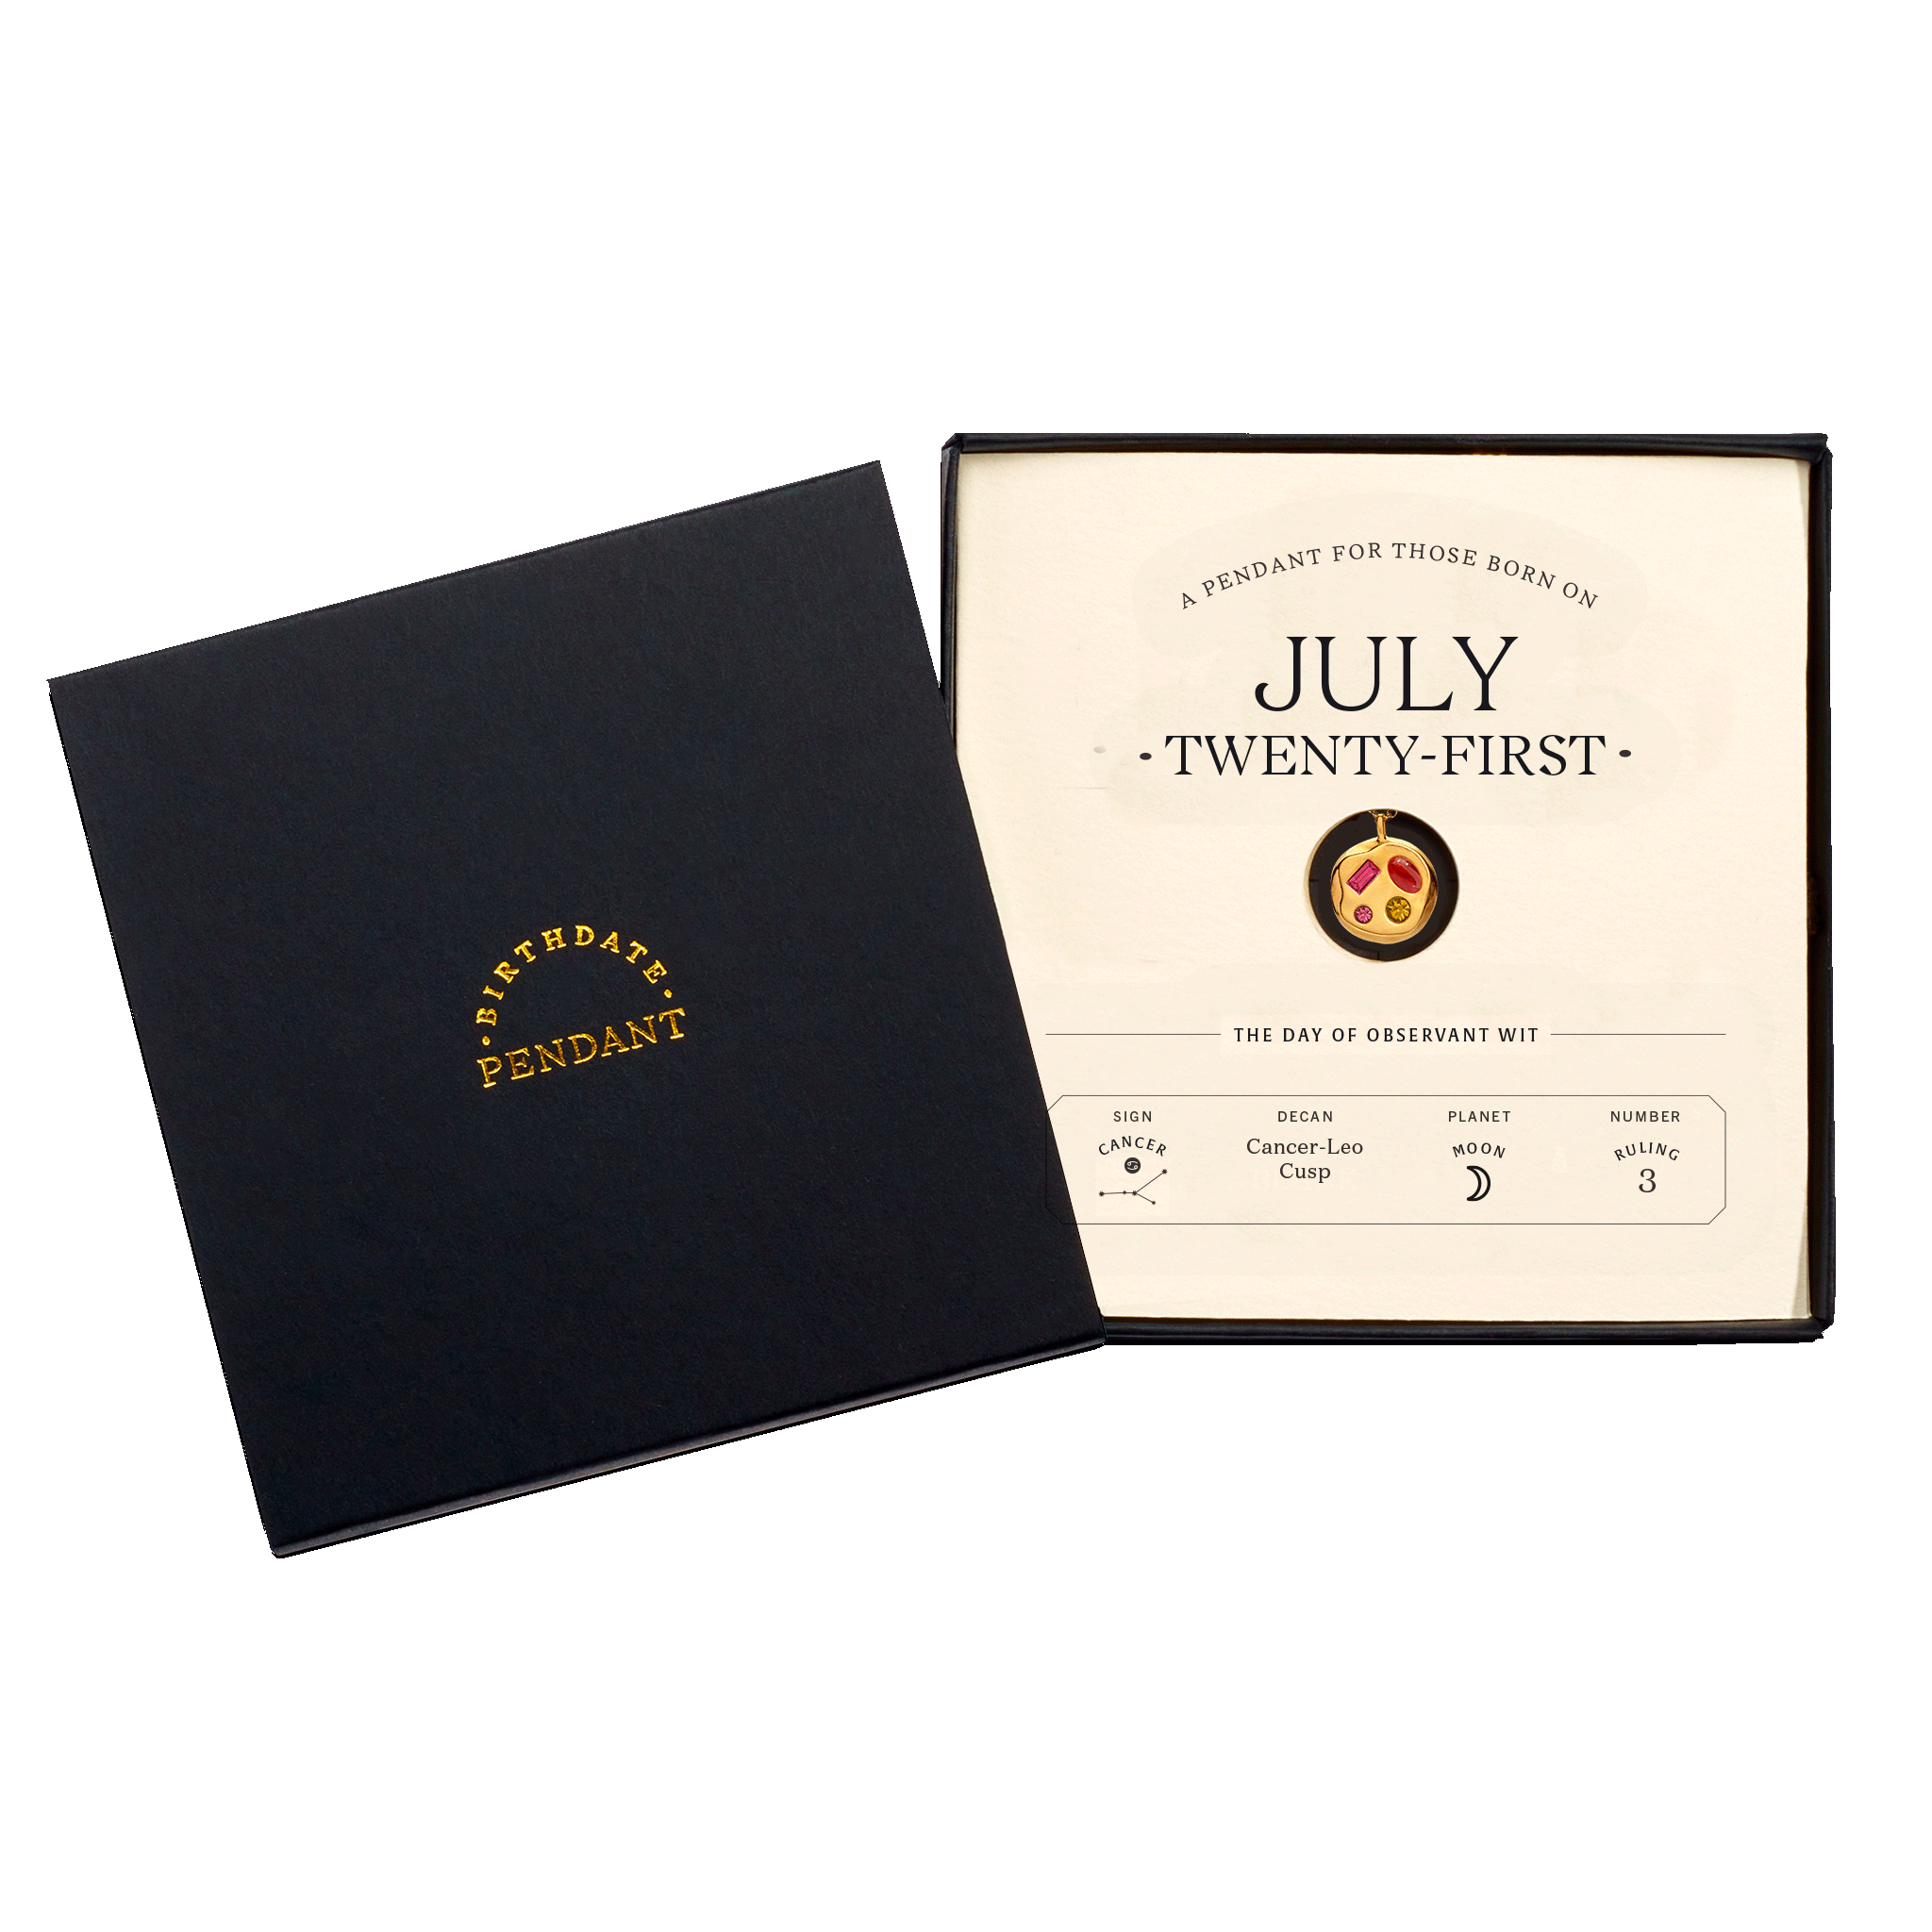 The July Twenty-First Pendant inside its box